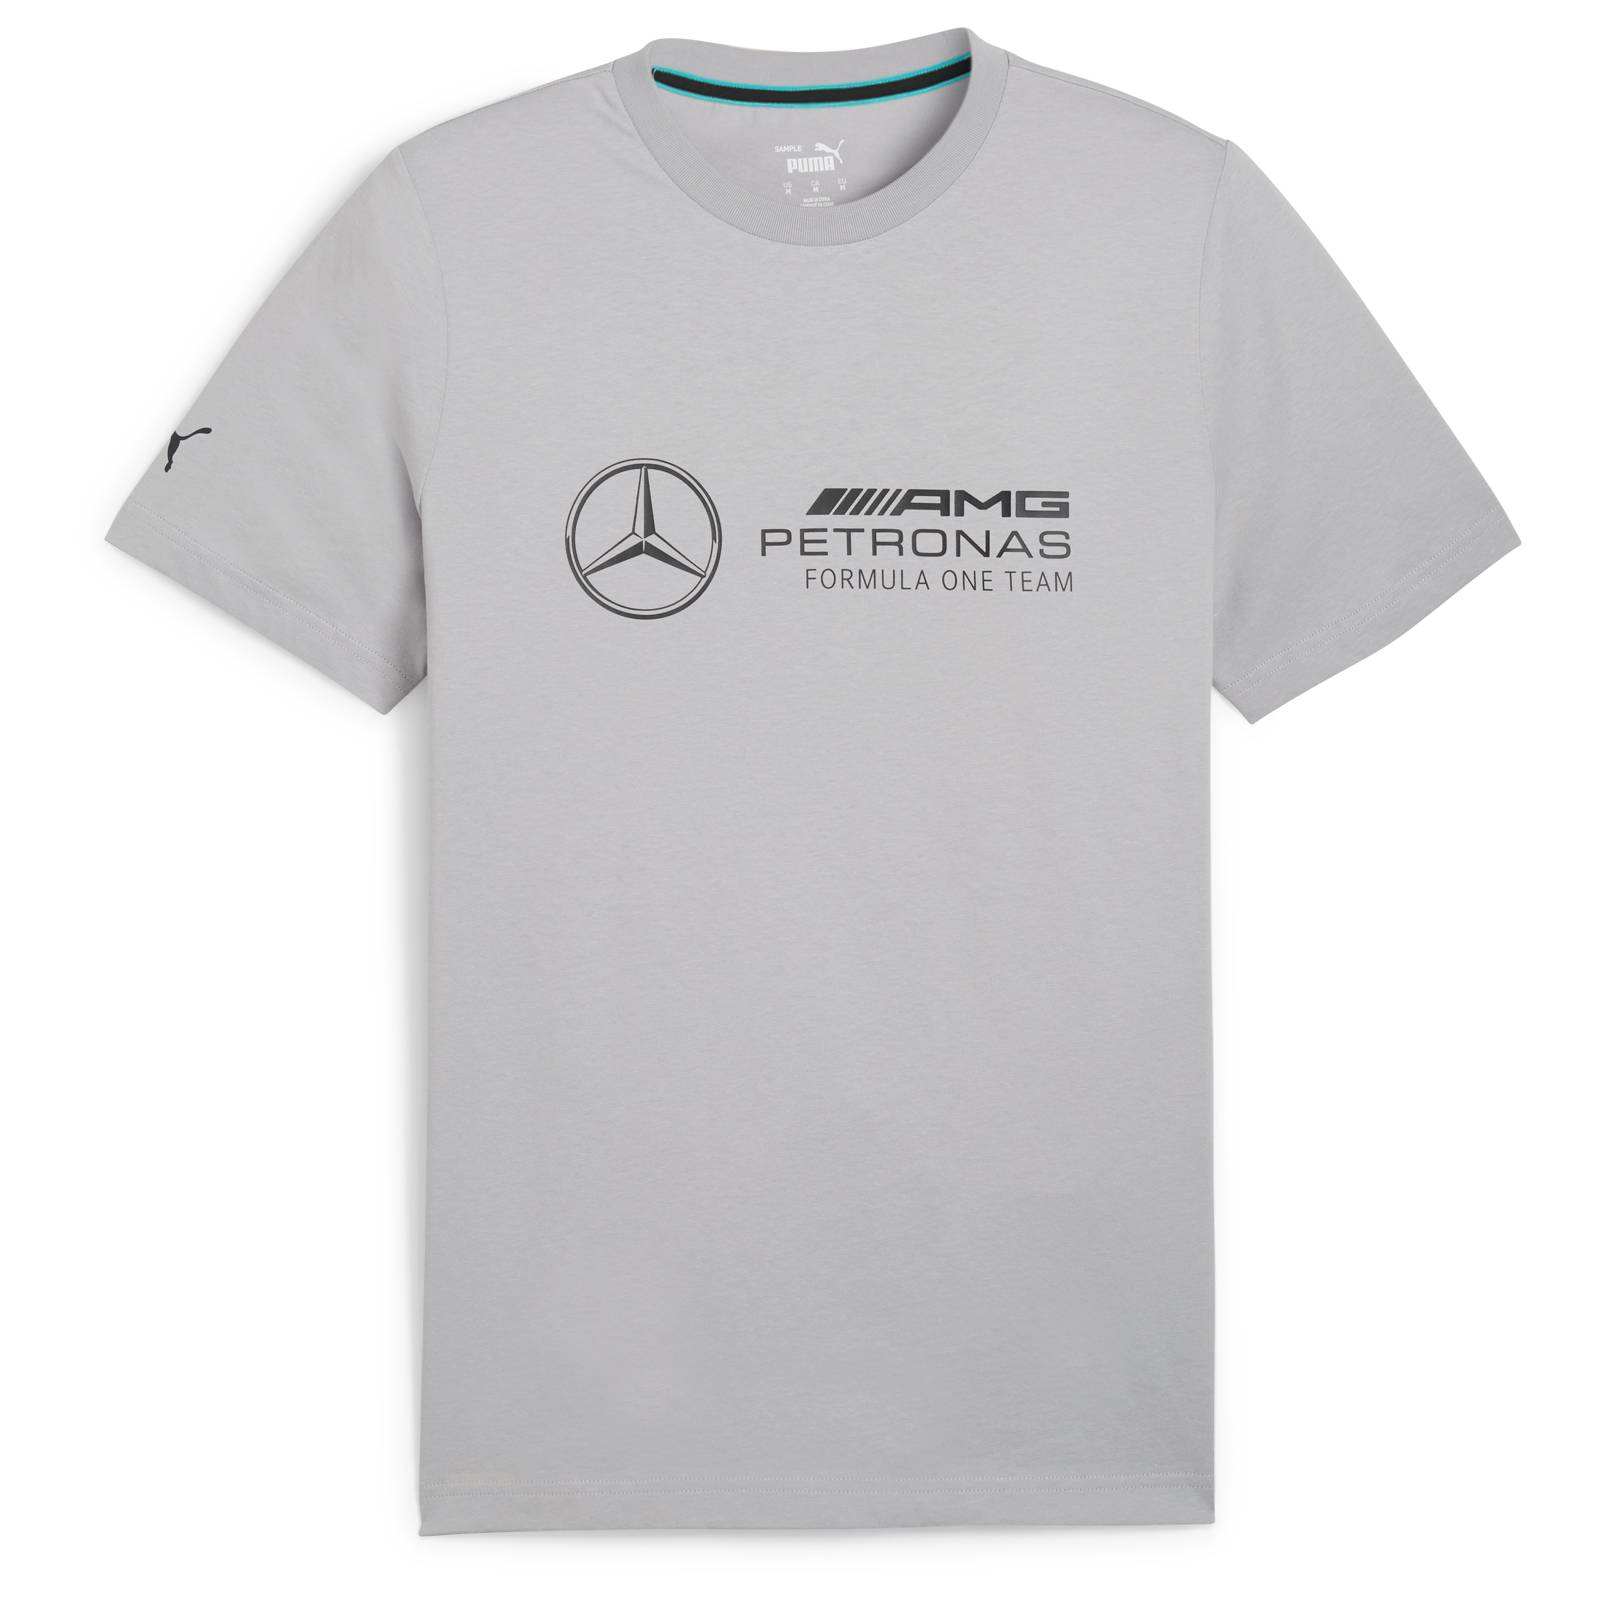 Mercedes AMG Petronas